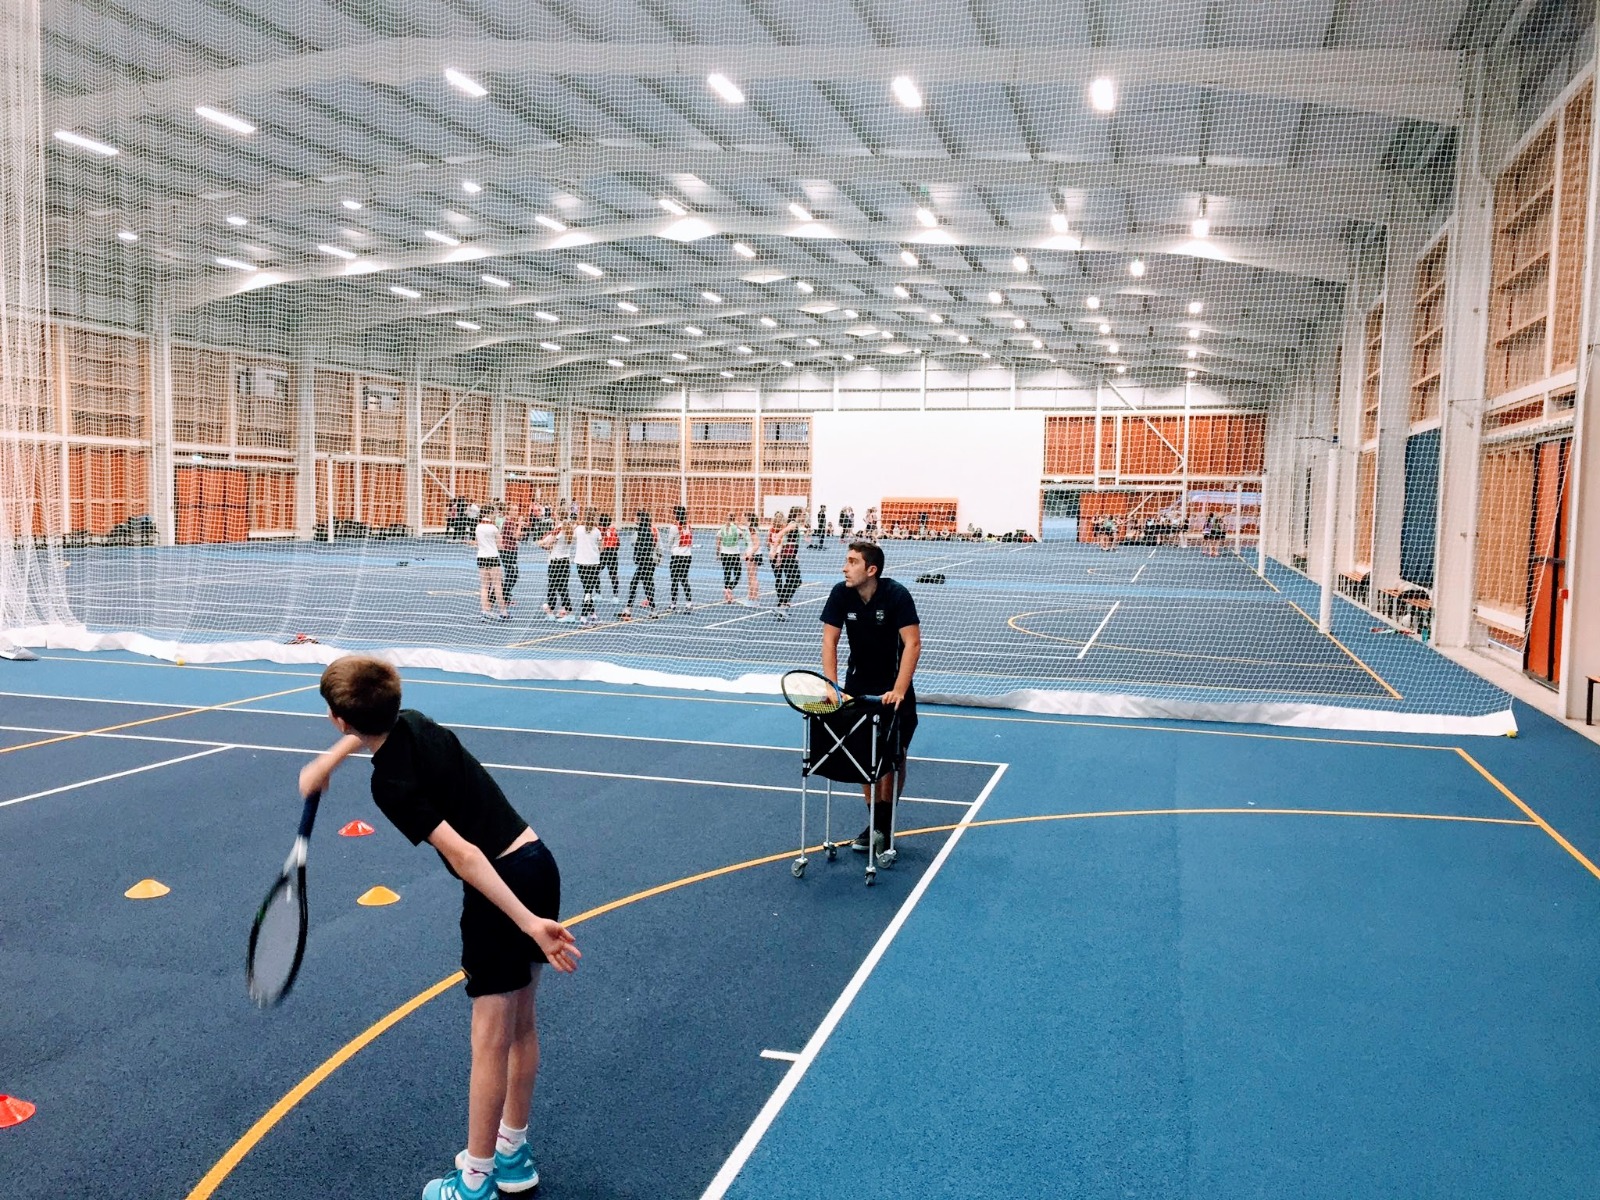 Indoor tennis hall divider netting